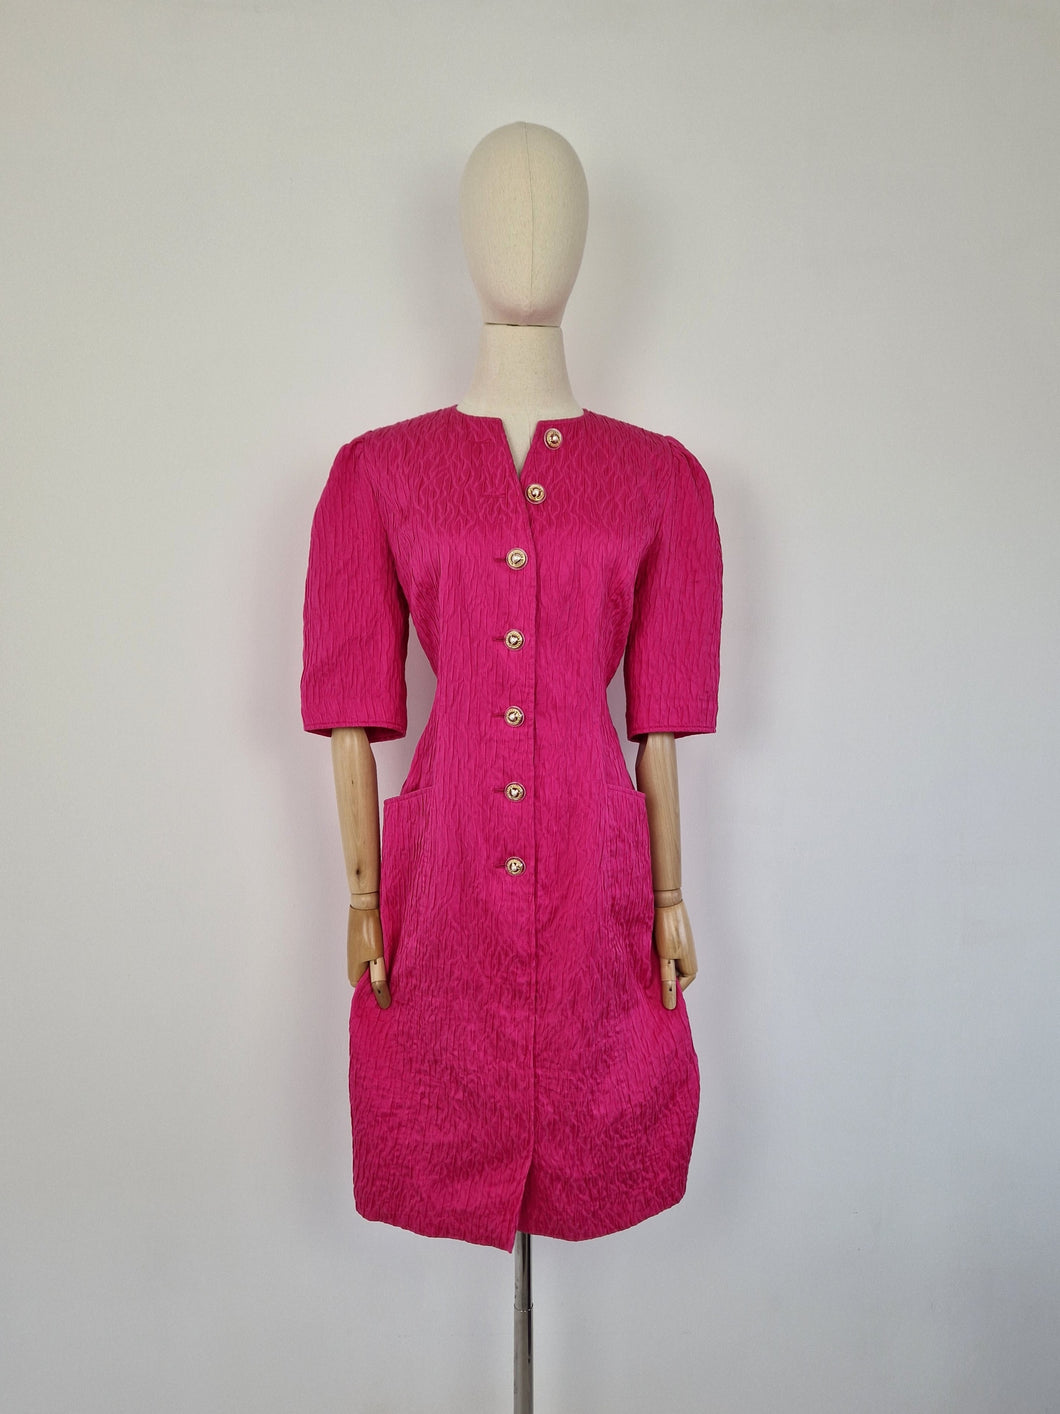 Vintage 80s bright pink dress